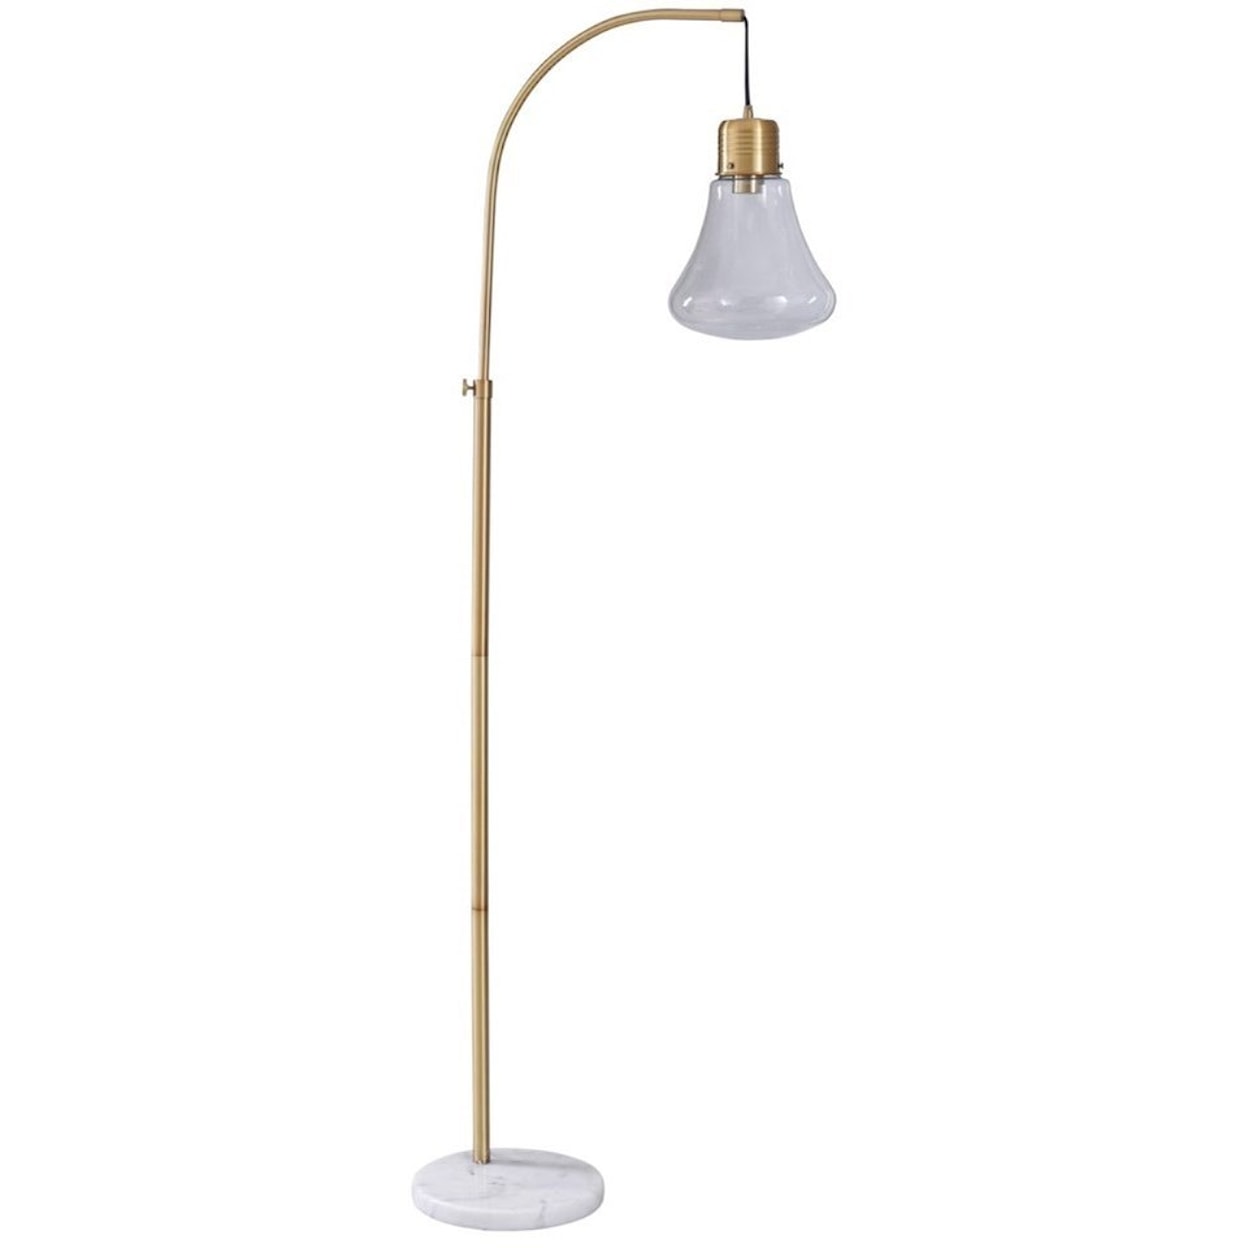 StyleCraft Lamps Marble / Steel / Glass Floor Lamp